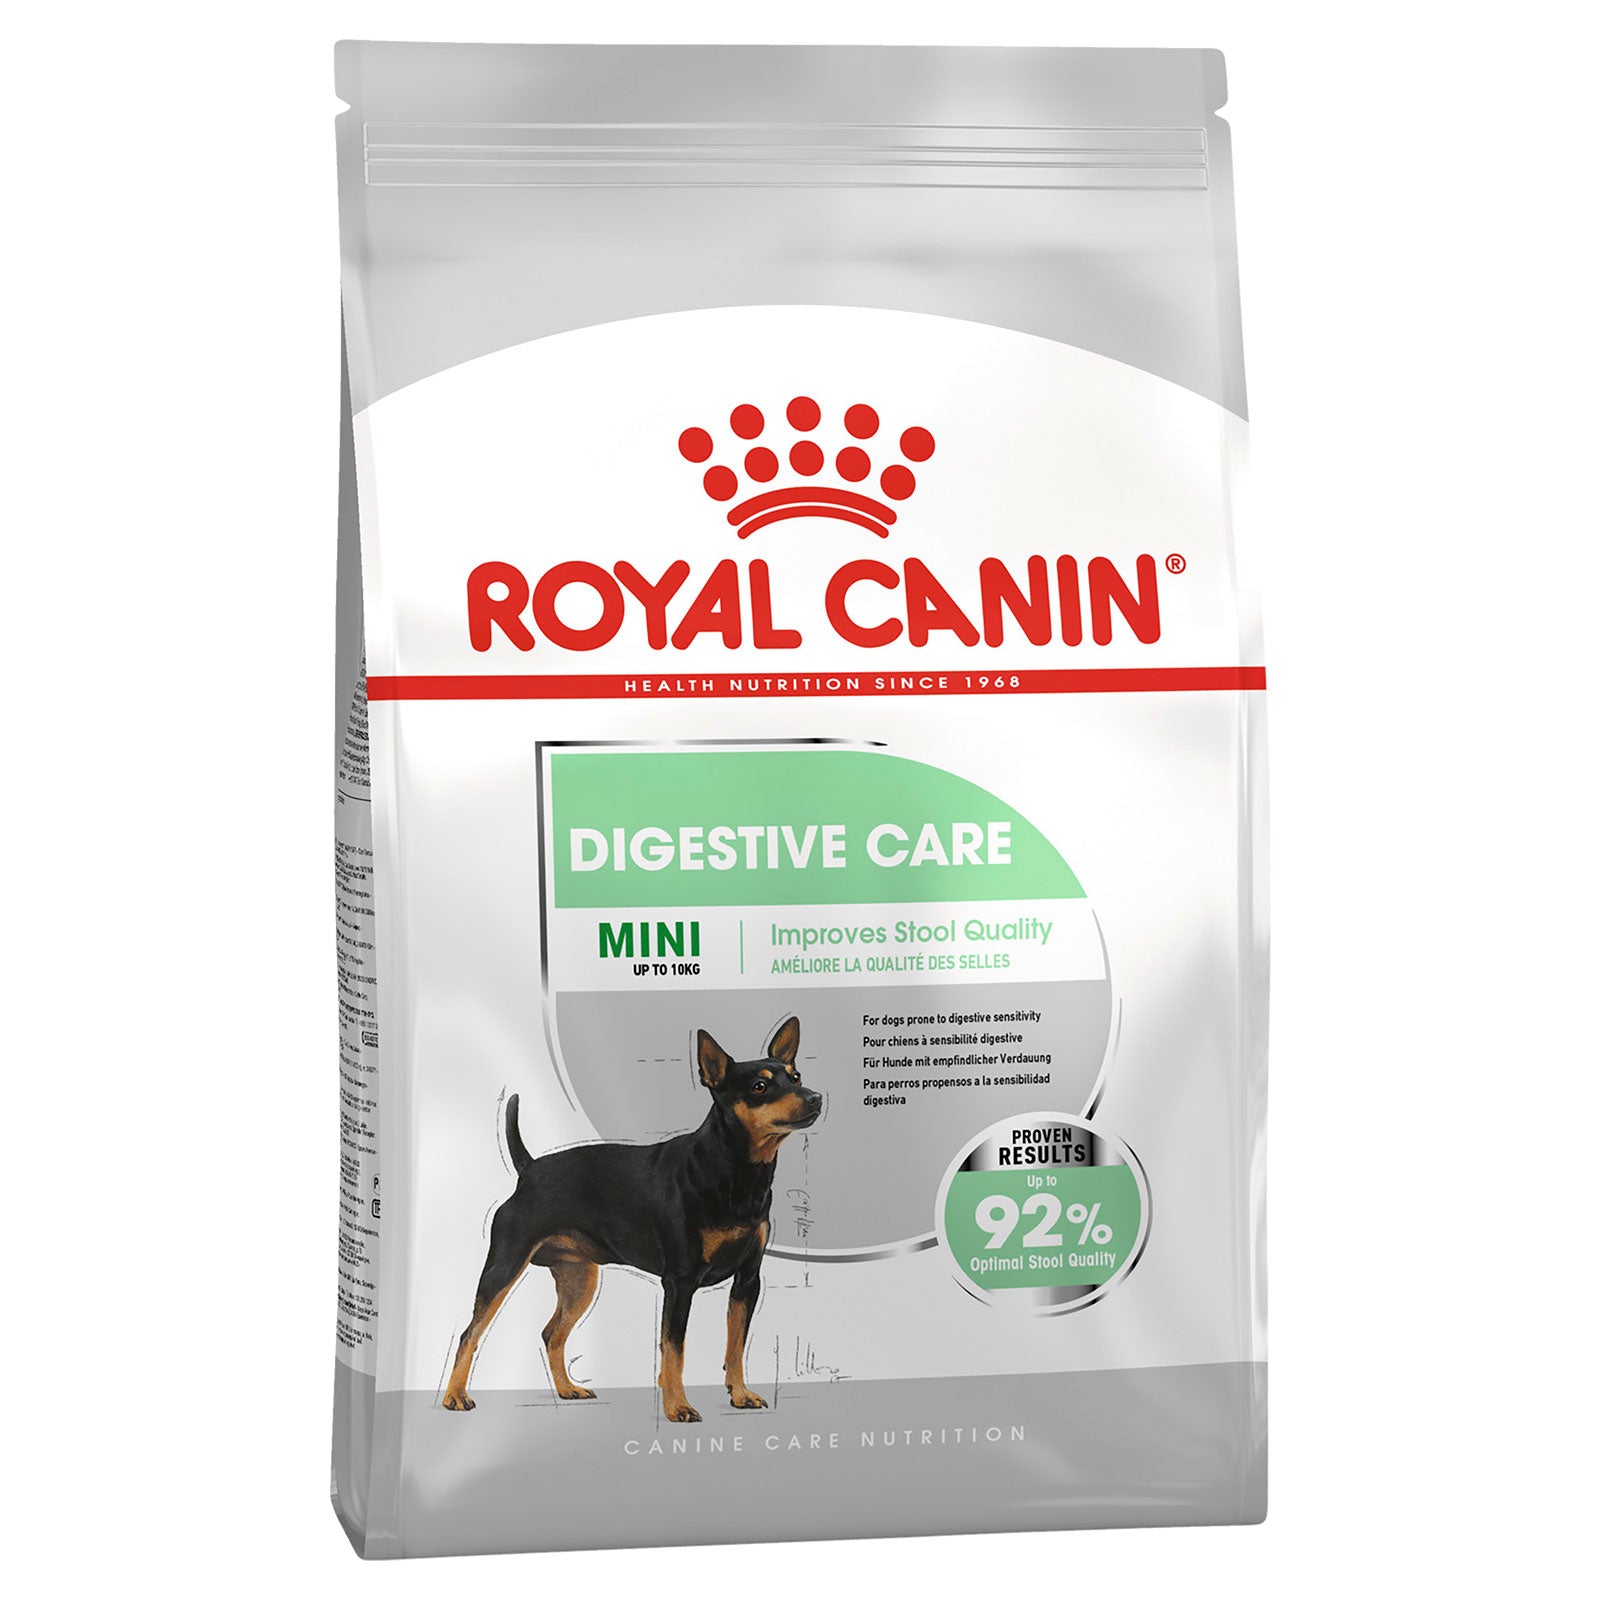 Royal Canin Dog Food Digestive Care Mini